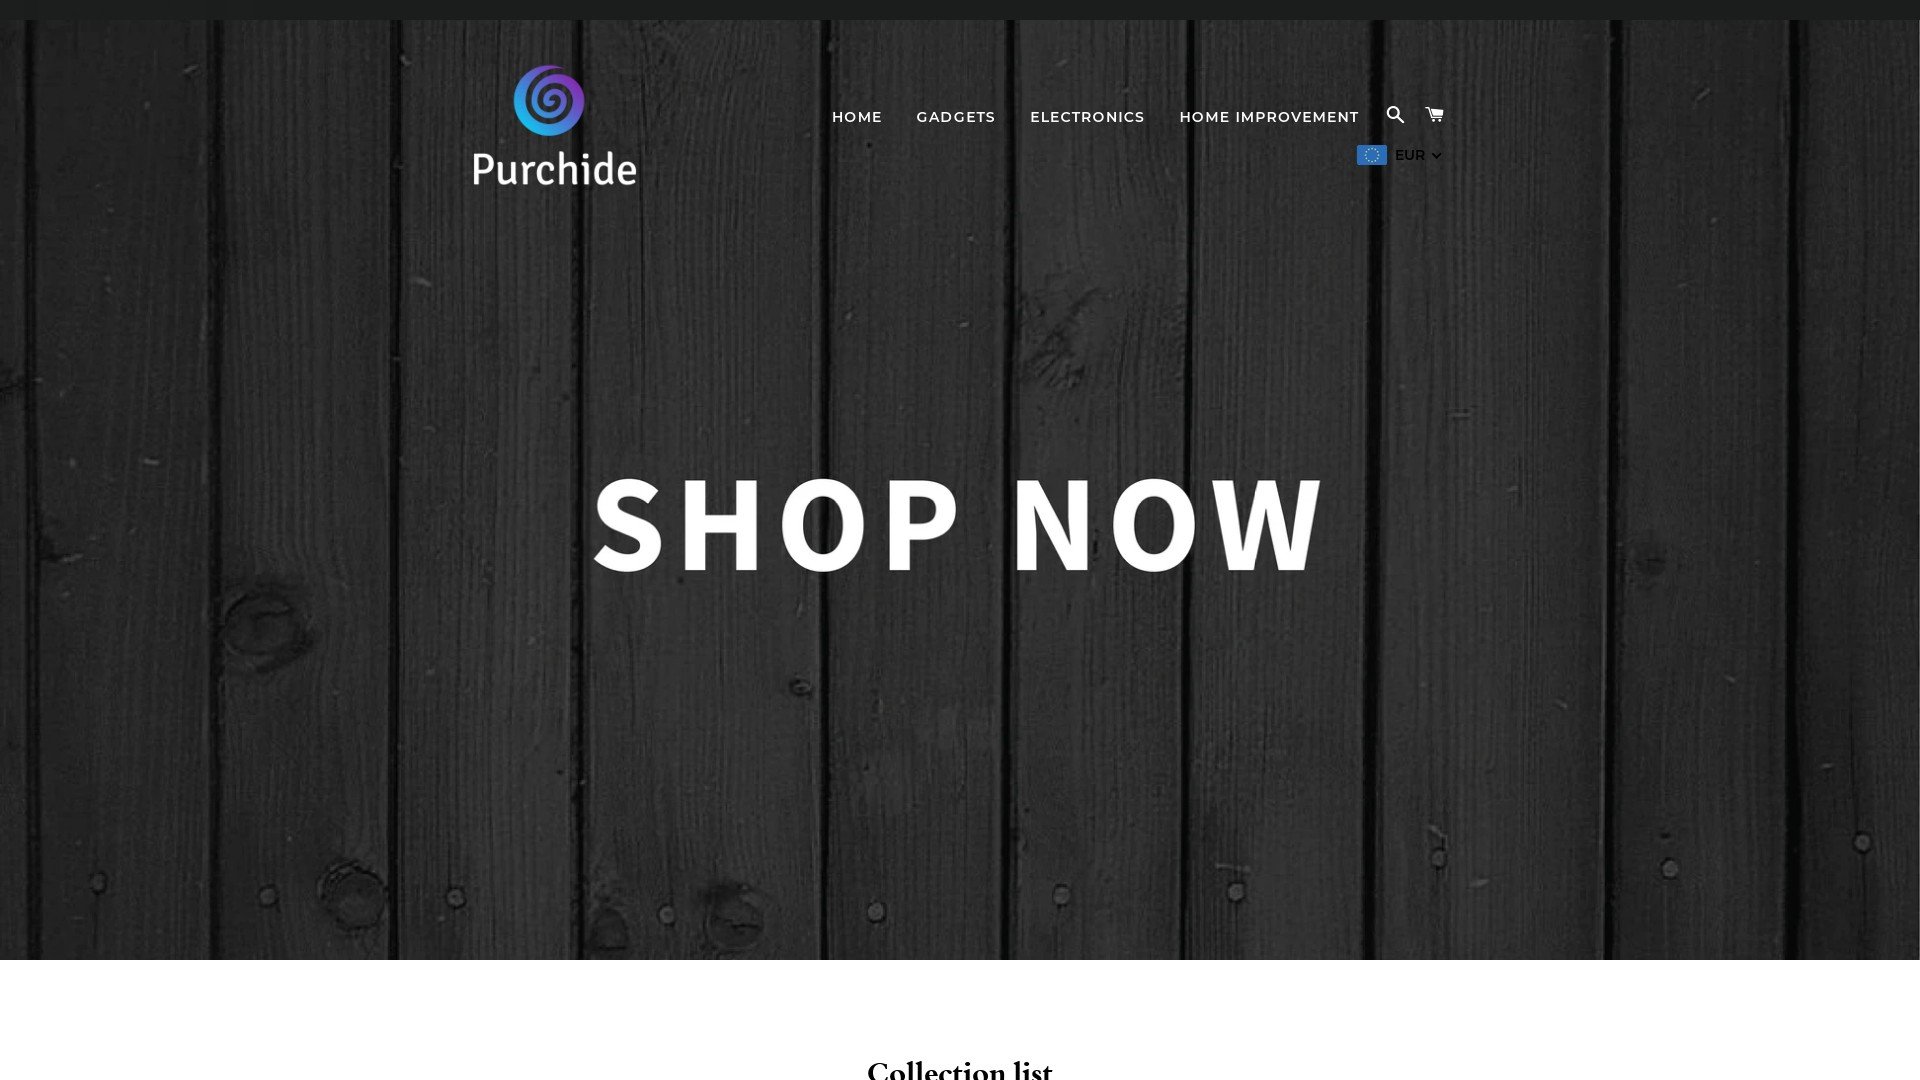 Purchide at purchide.com